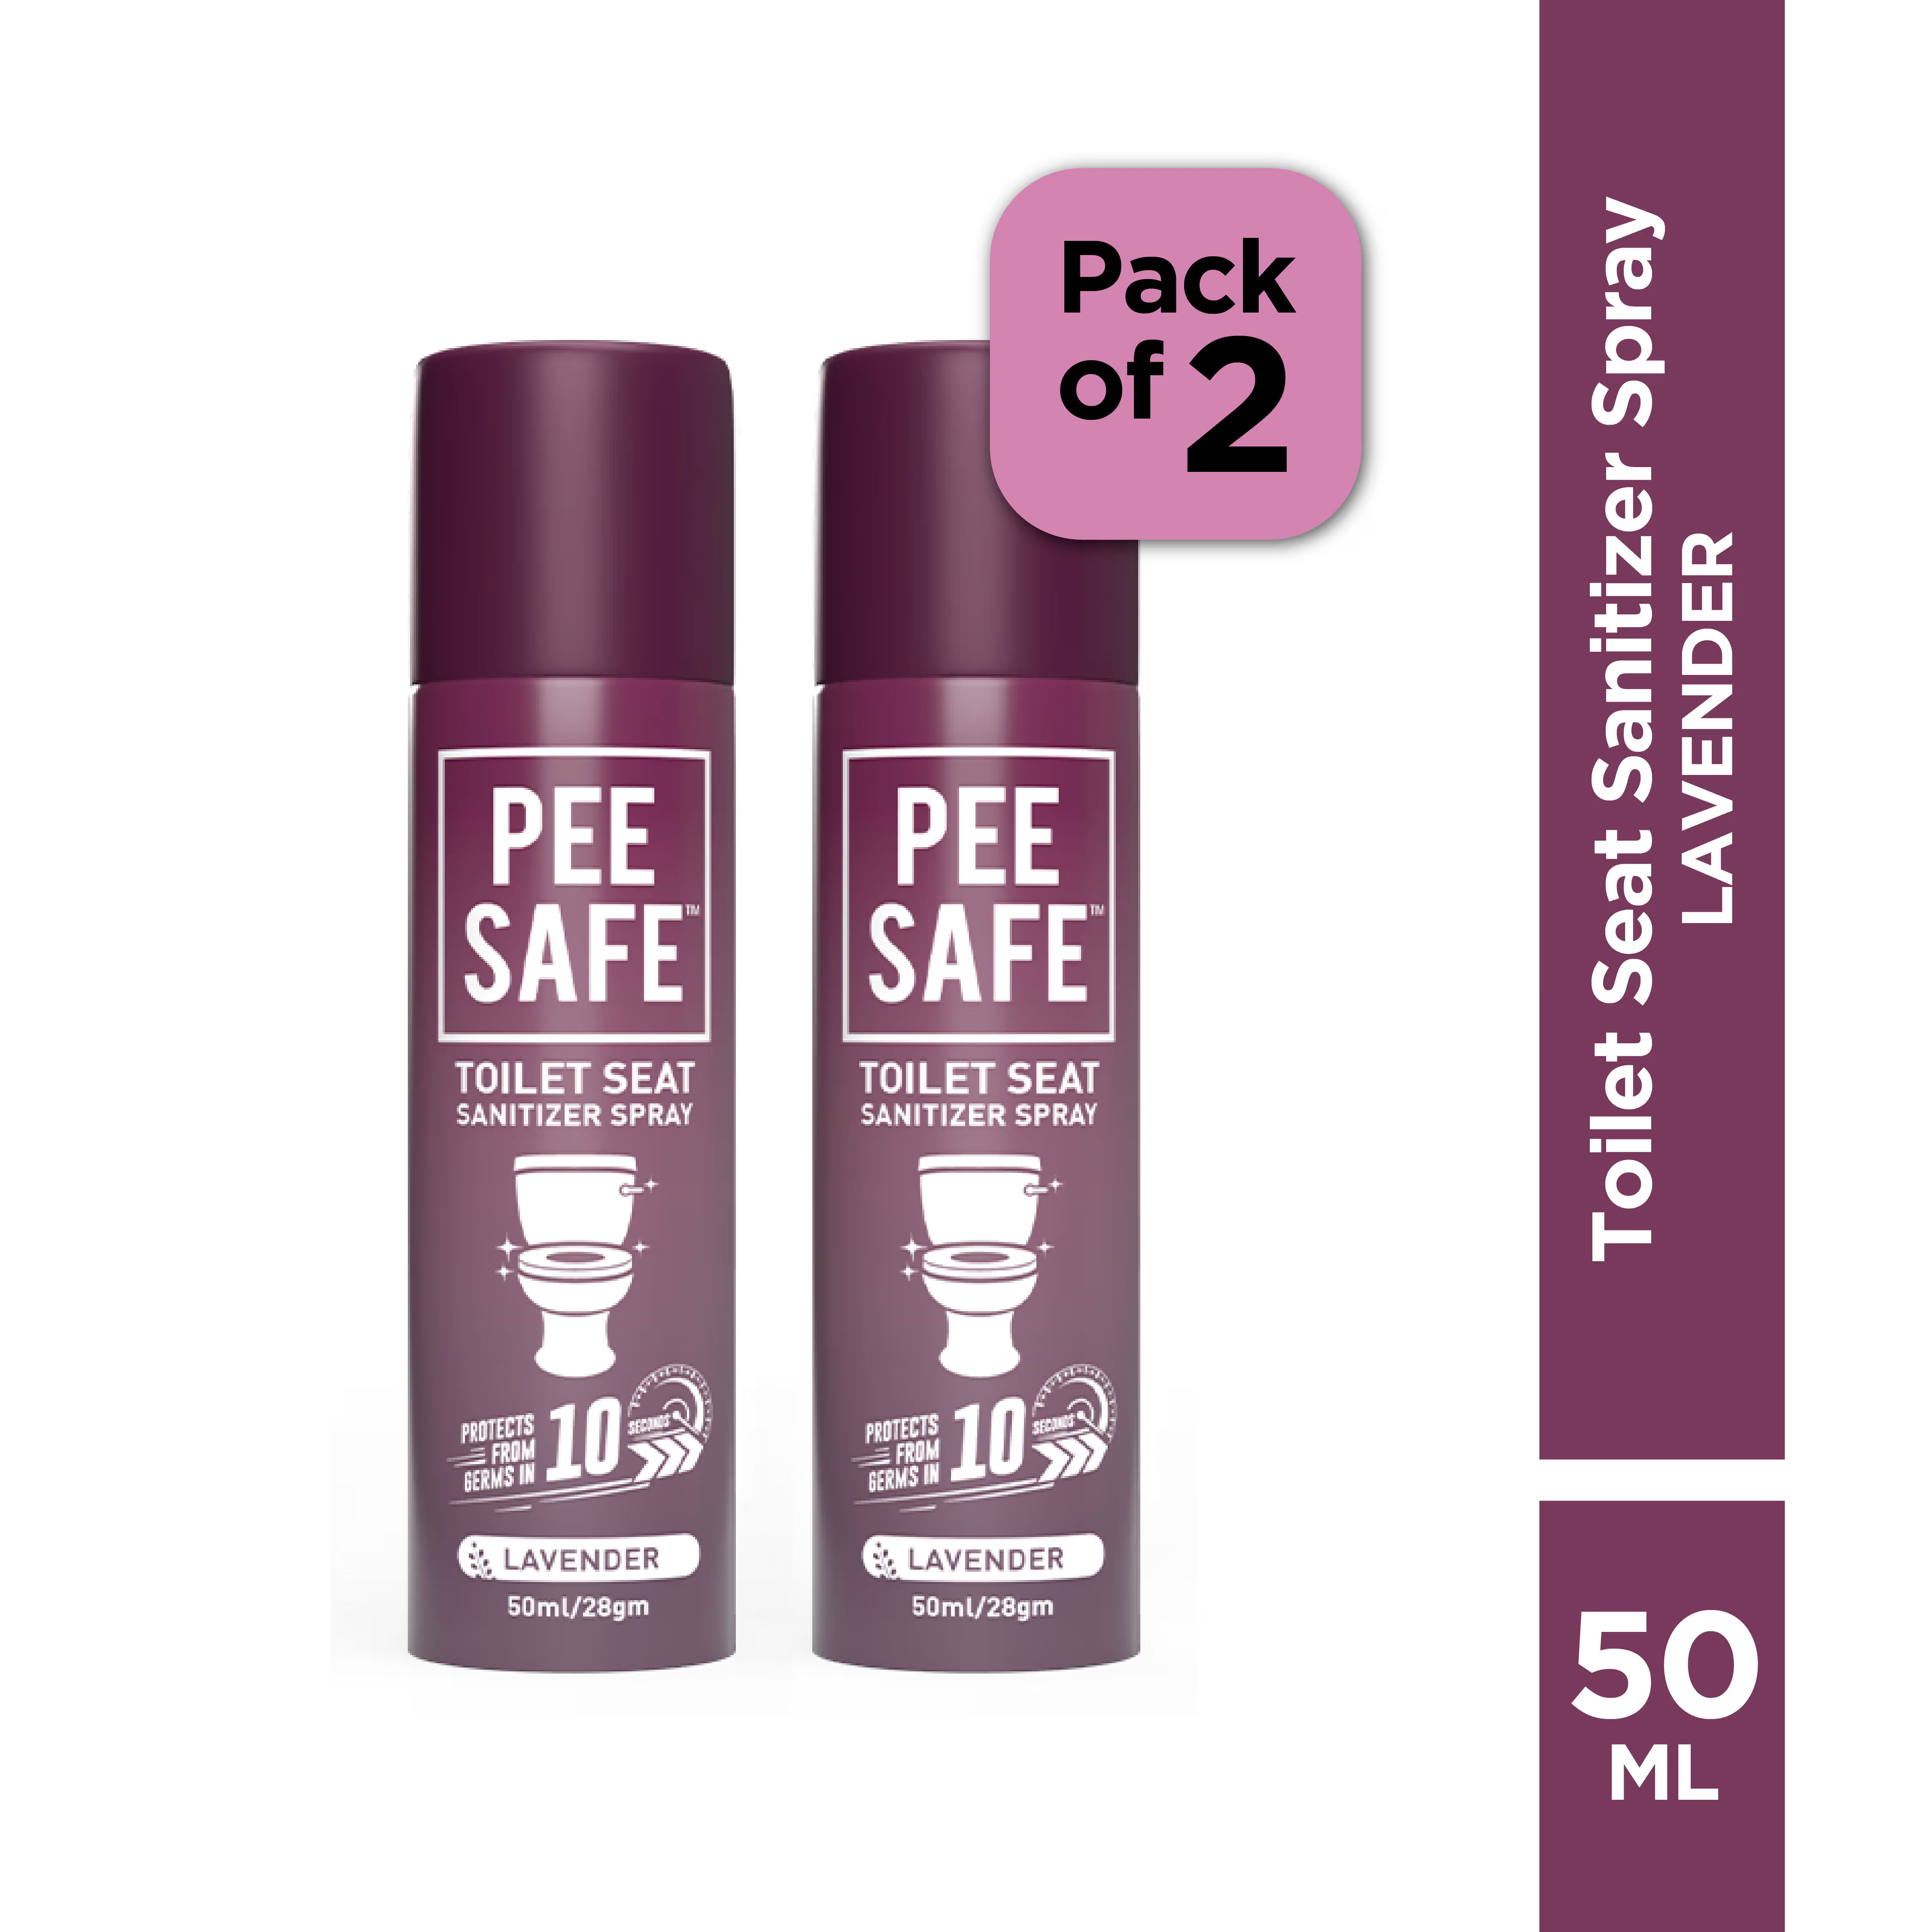 Pee Safe Lavender Toilet Seat Sanitizer Spray - Anti-Odour & Travel-Friendly (Pack of 2, 50ml)